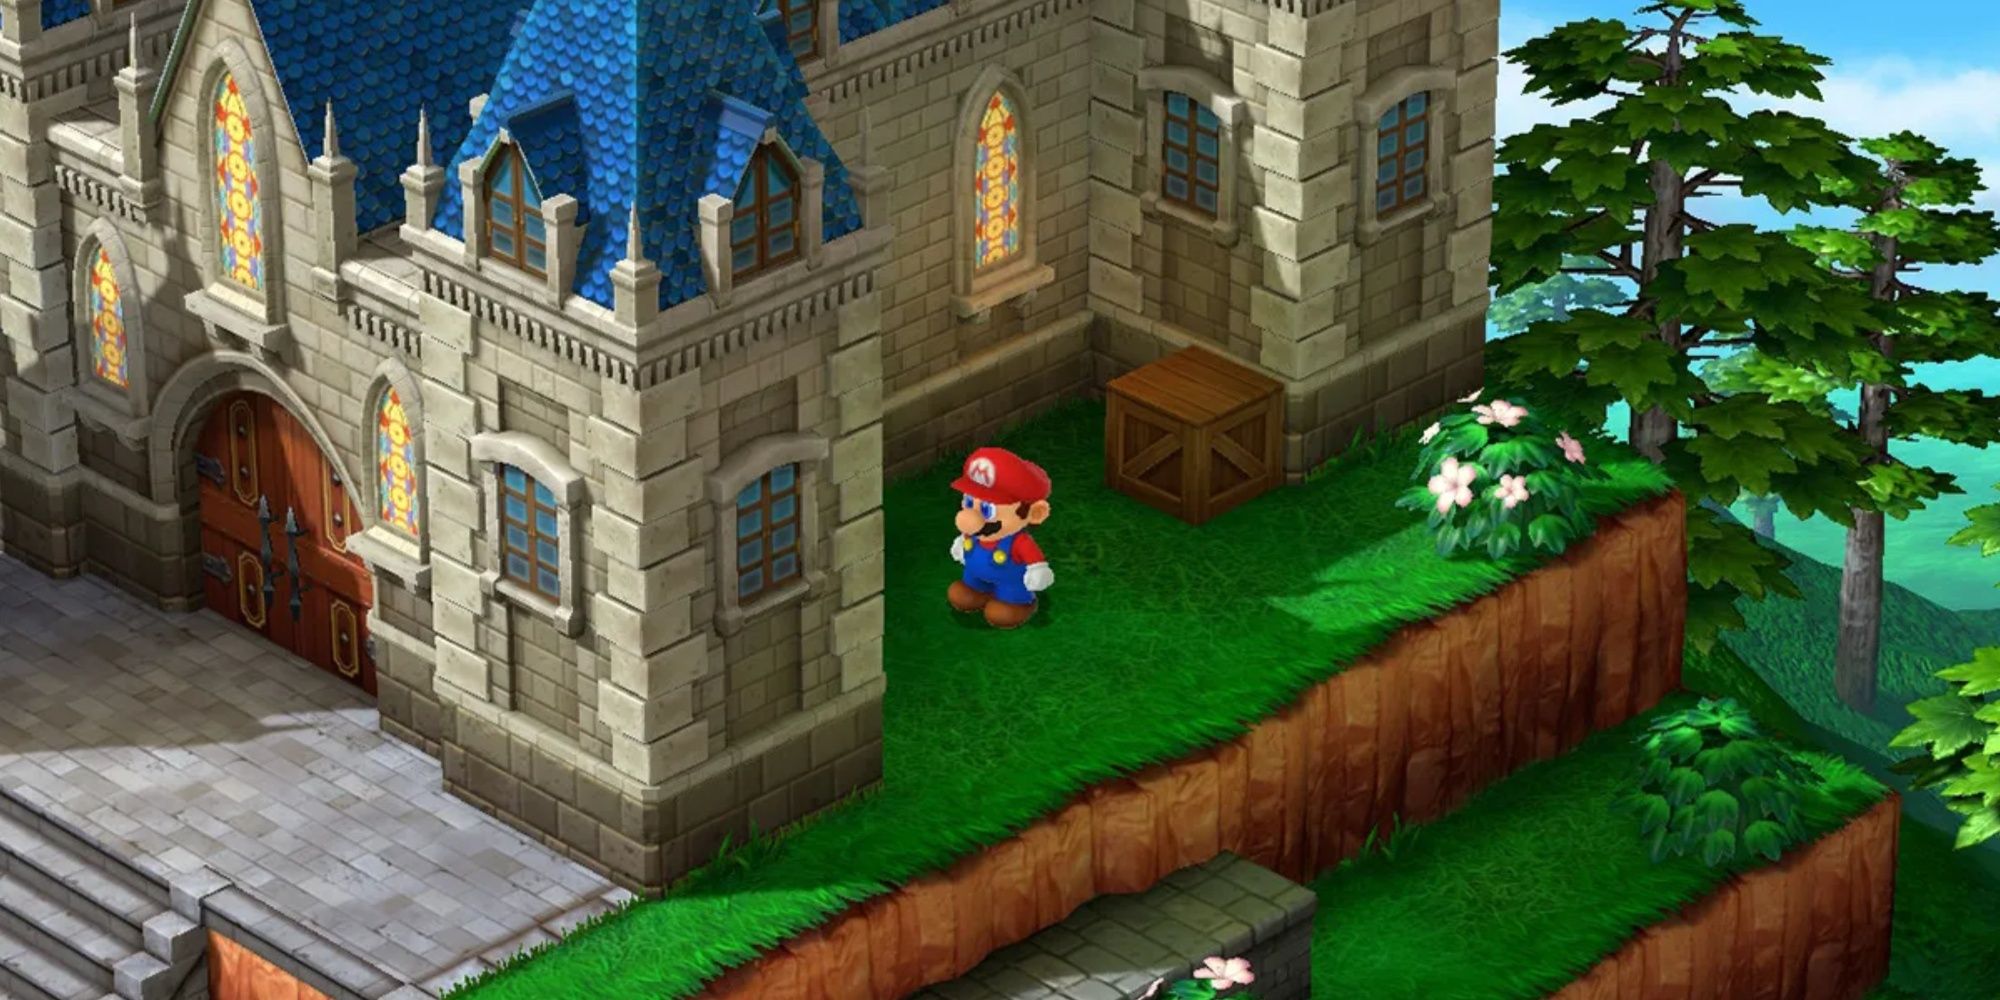 Mario Standing Next To The Wedding Chapel